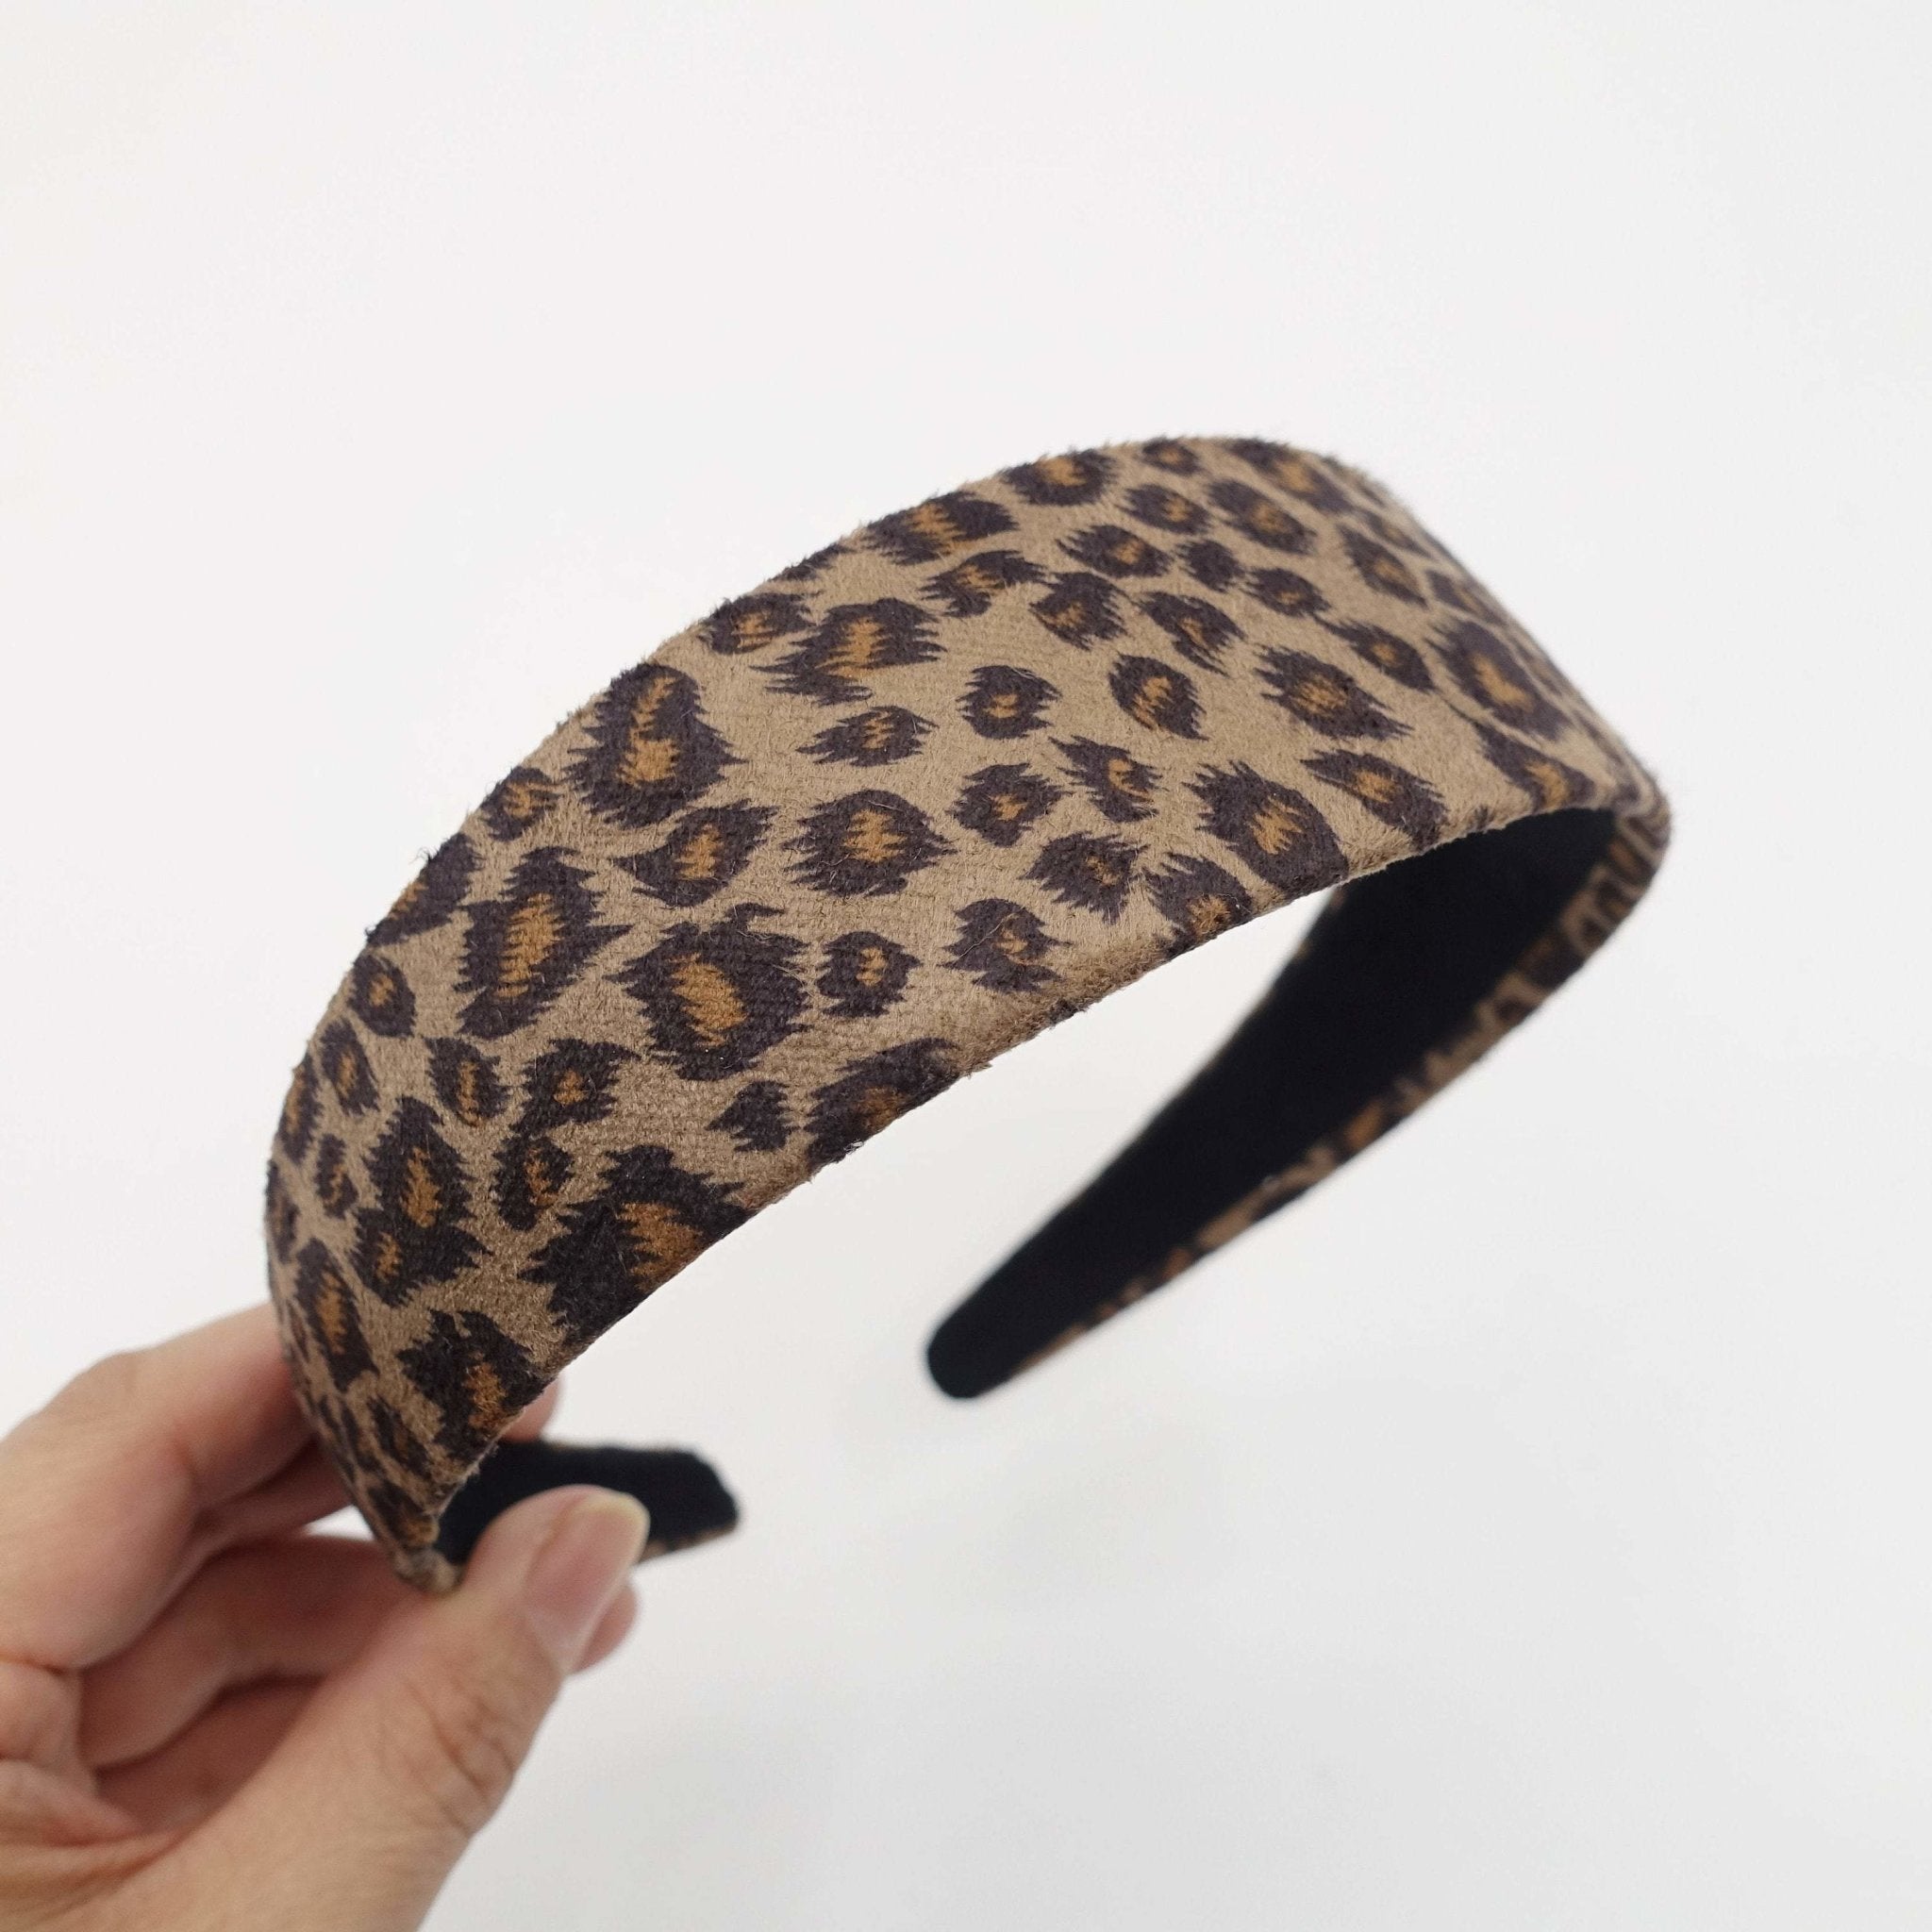 veryshine.com hairband/headband Brown leopard print suede fabric hairband medium fashion animal print headband women hair accessory